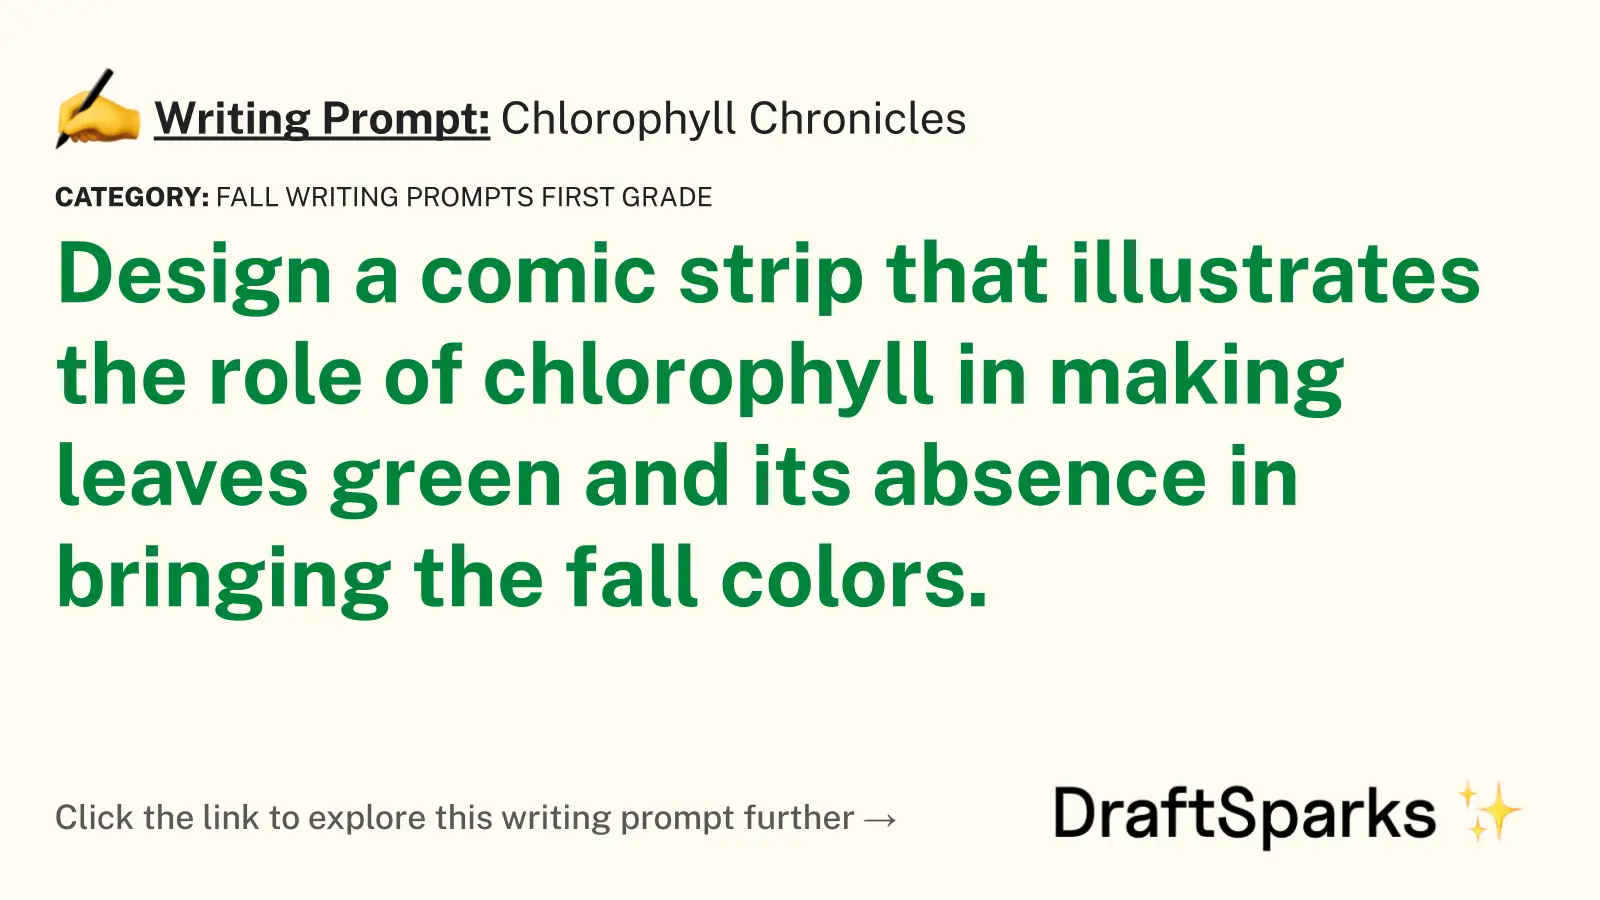 Chlorophyll Chronicles